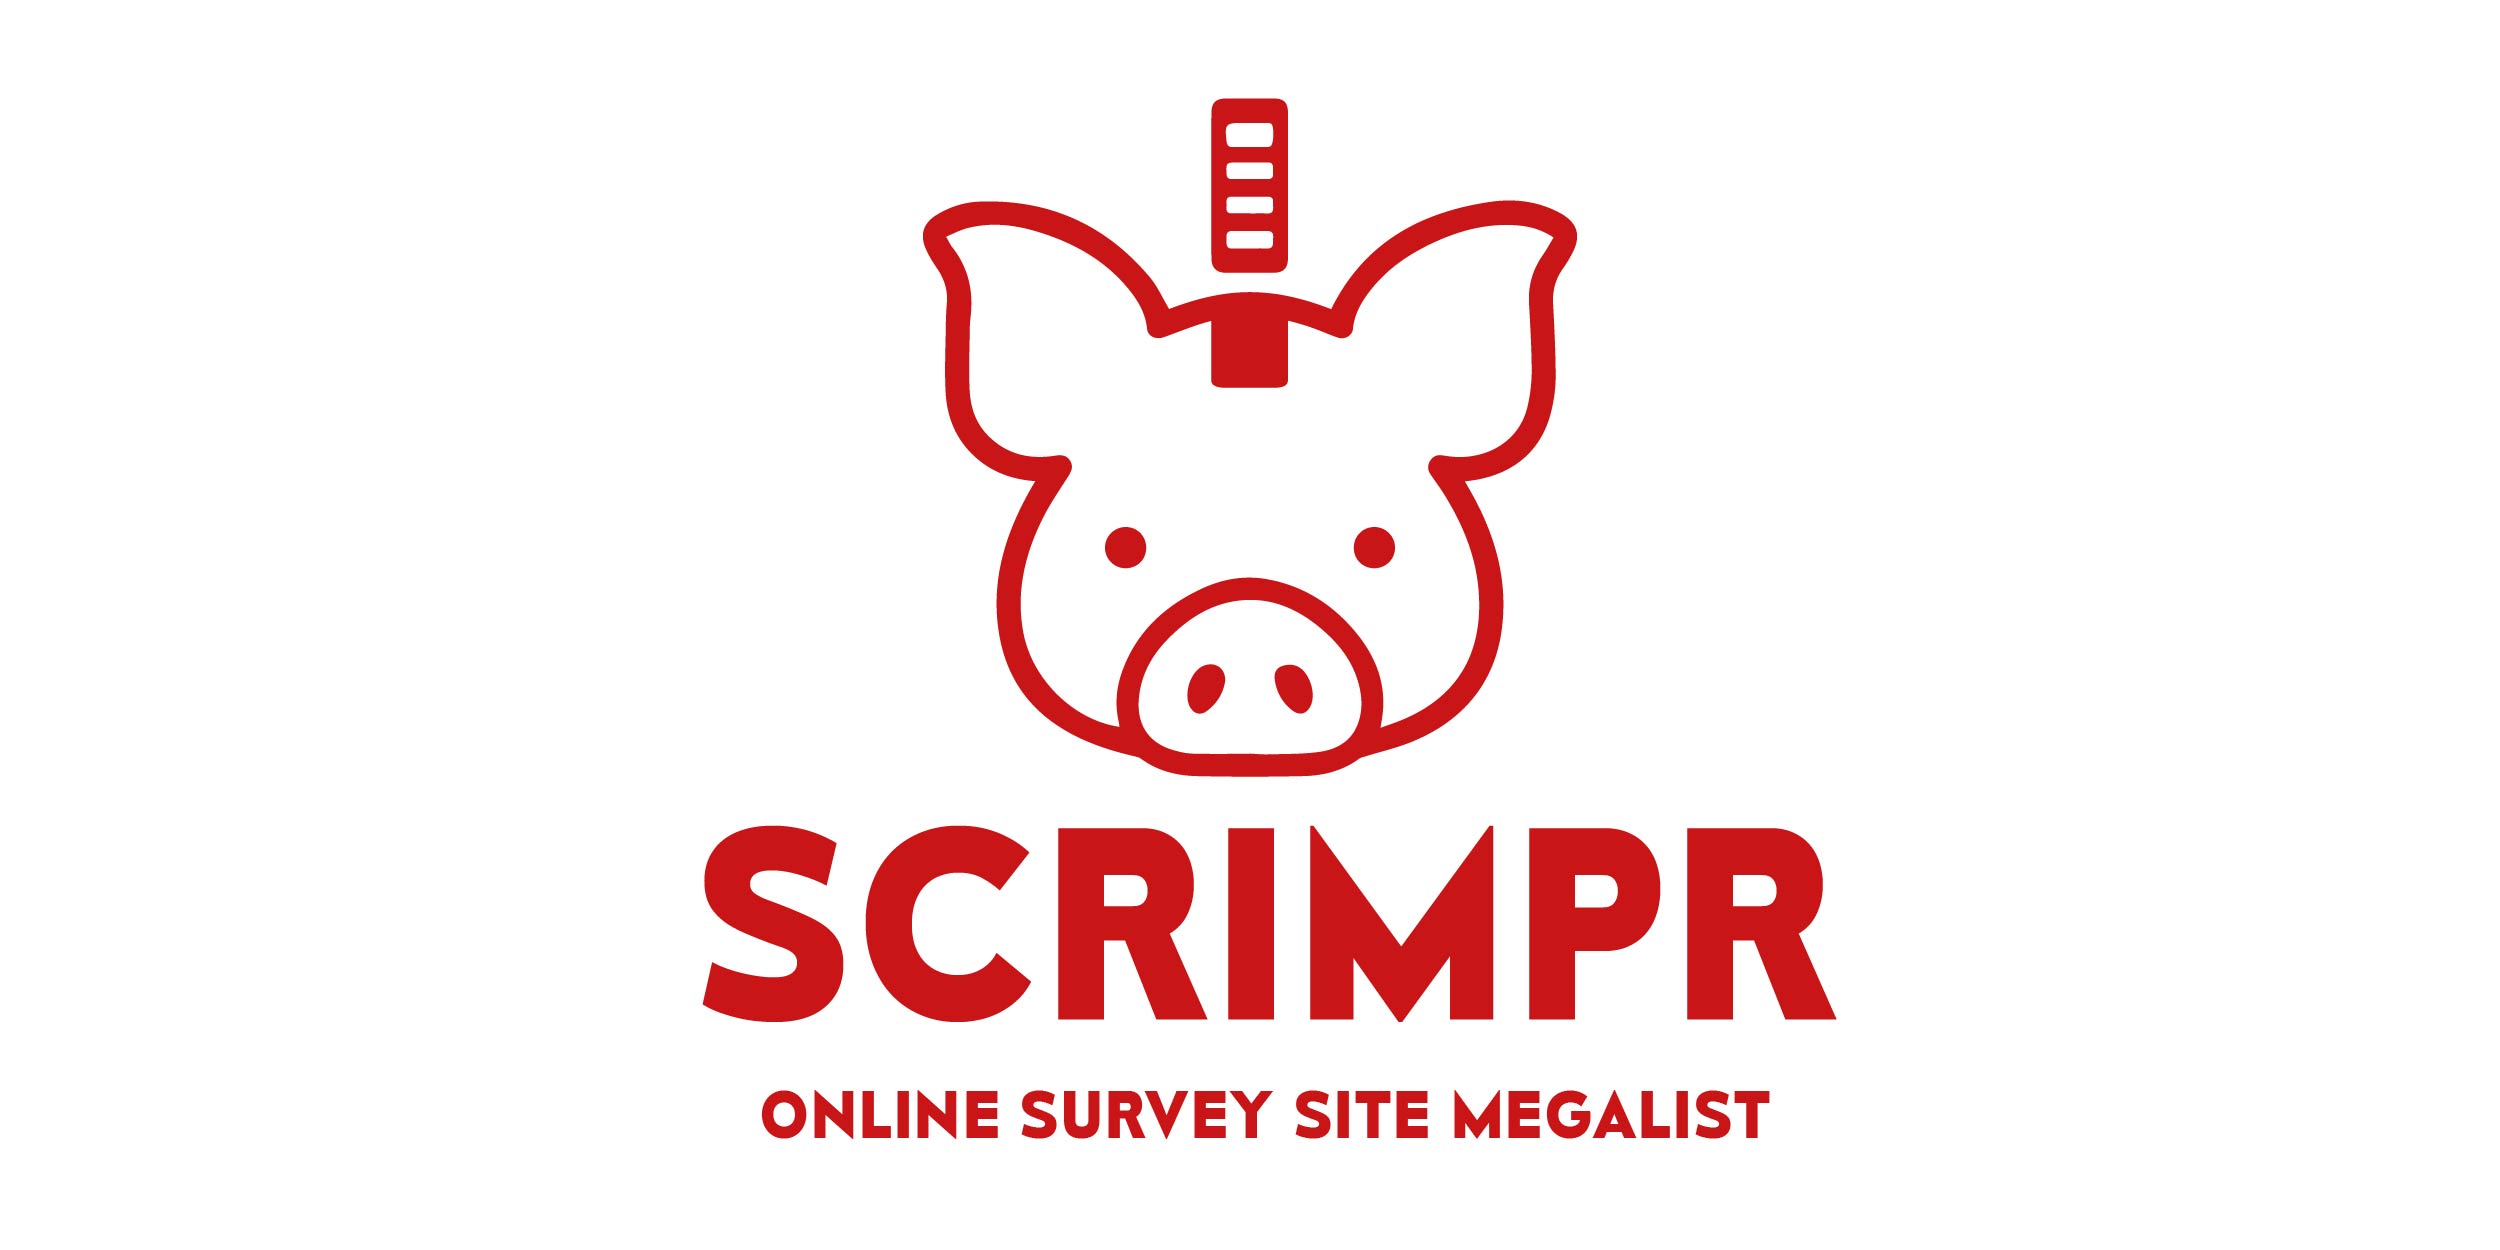 Scrimpr Online Survey Site Megalist Logo